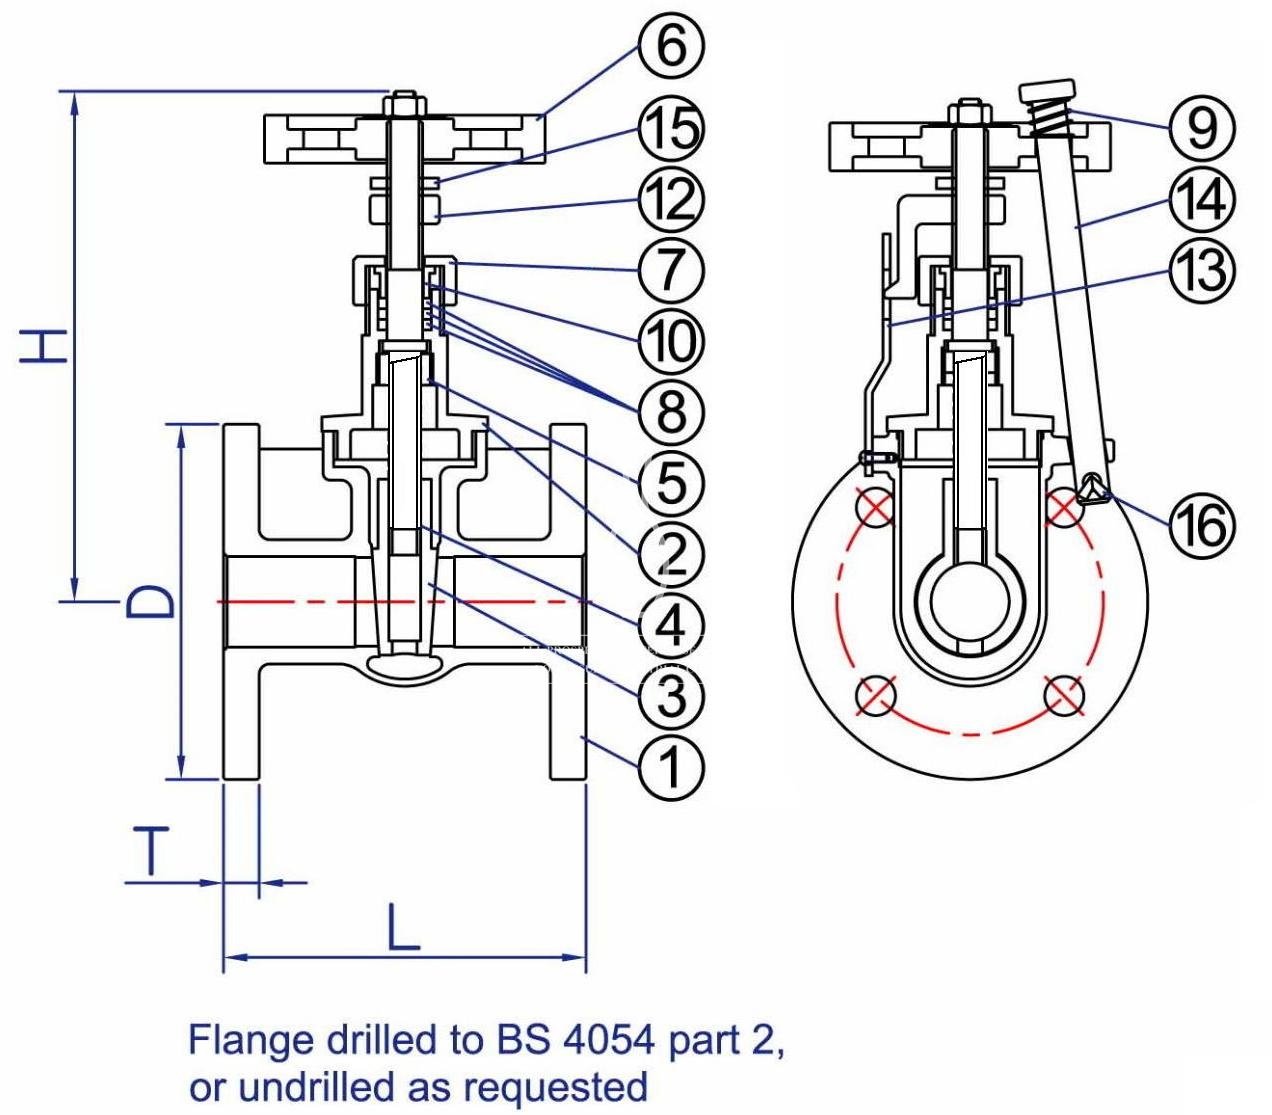 ST-802 Transformer Valve drawing